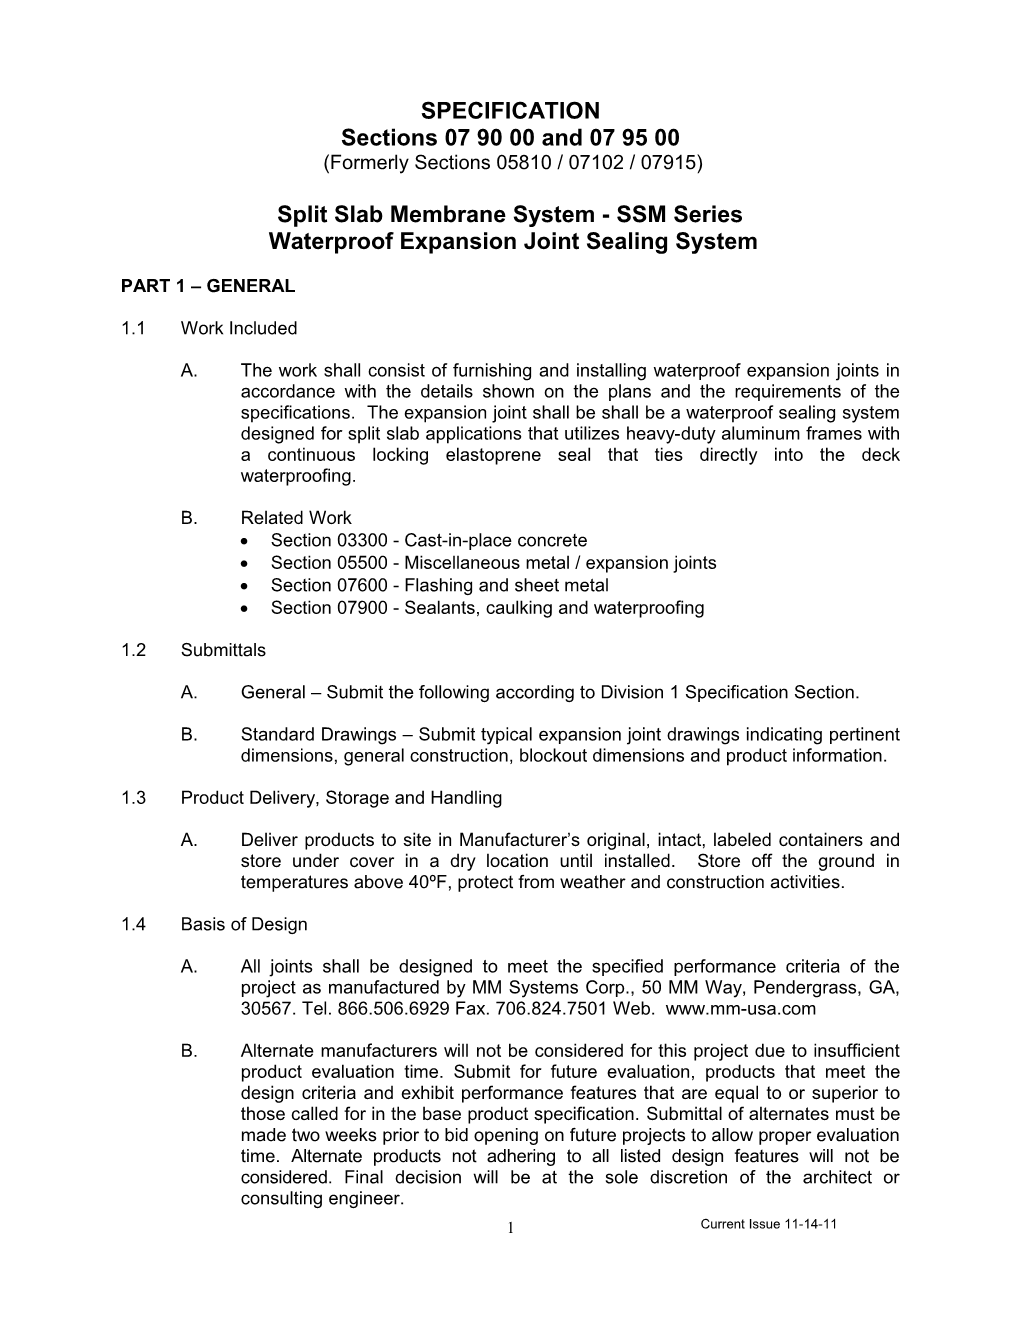 Split Slab Membrane System - SSM Series